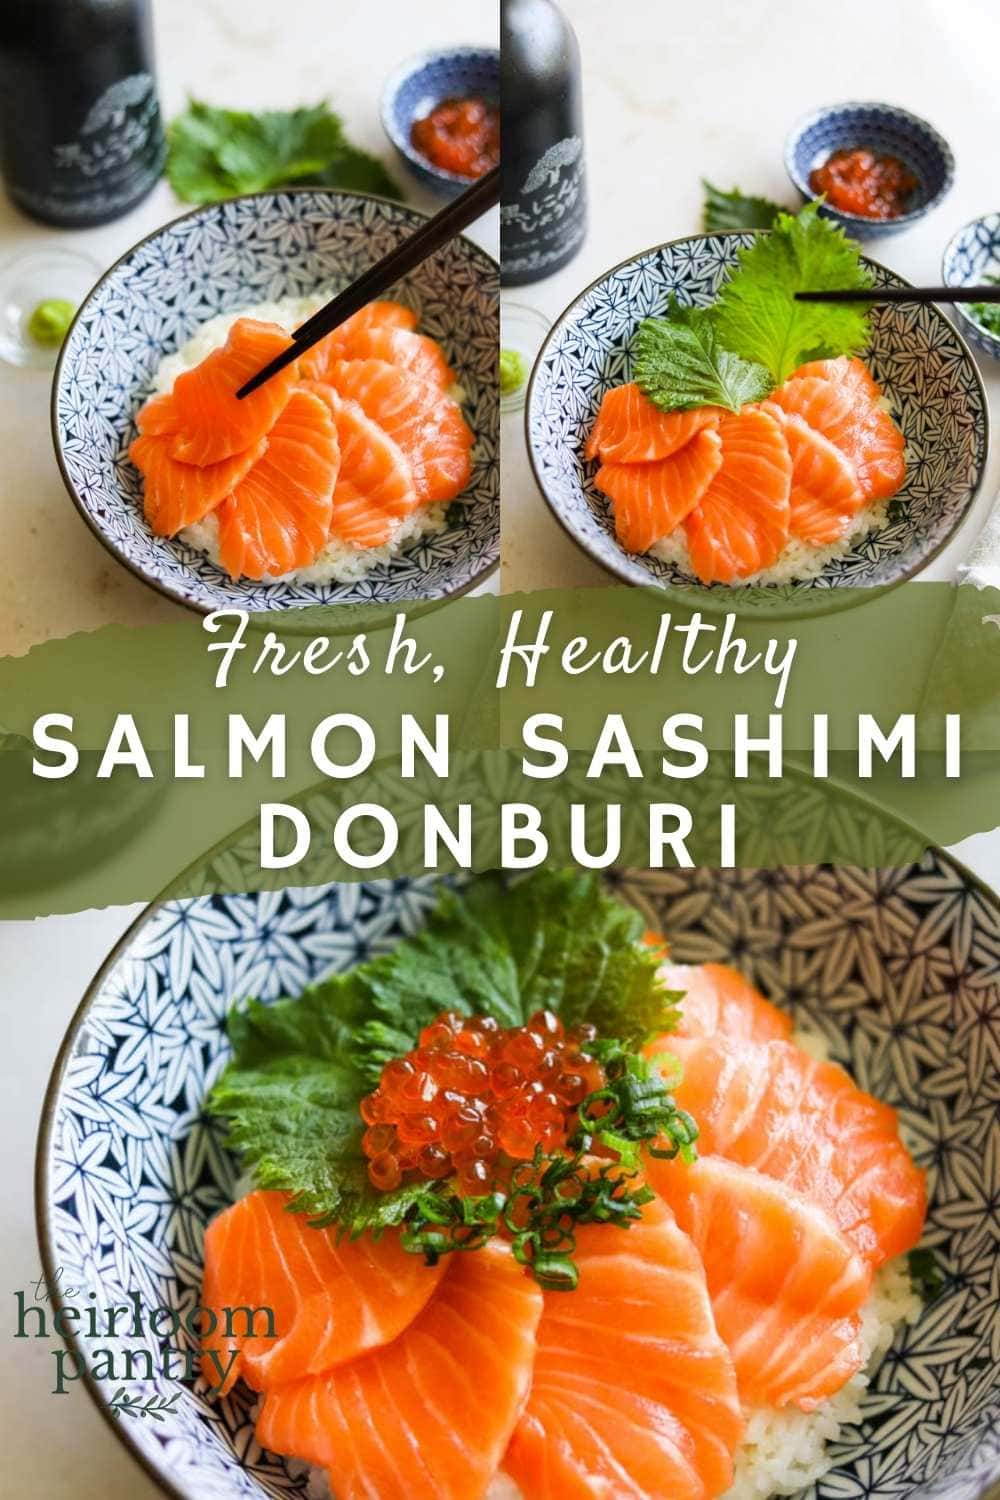 Salmon sashimi donburi rice bowl Pinterest pin.